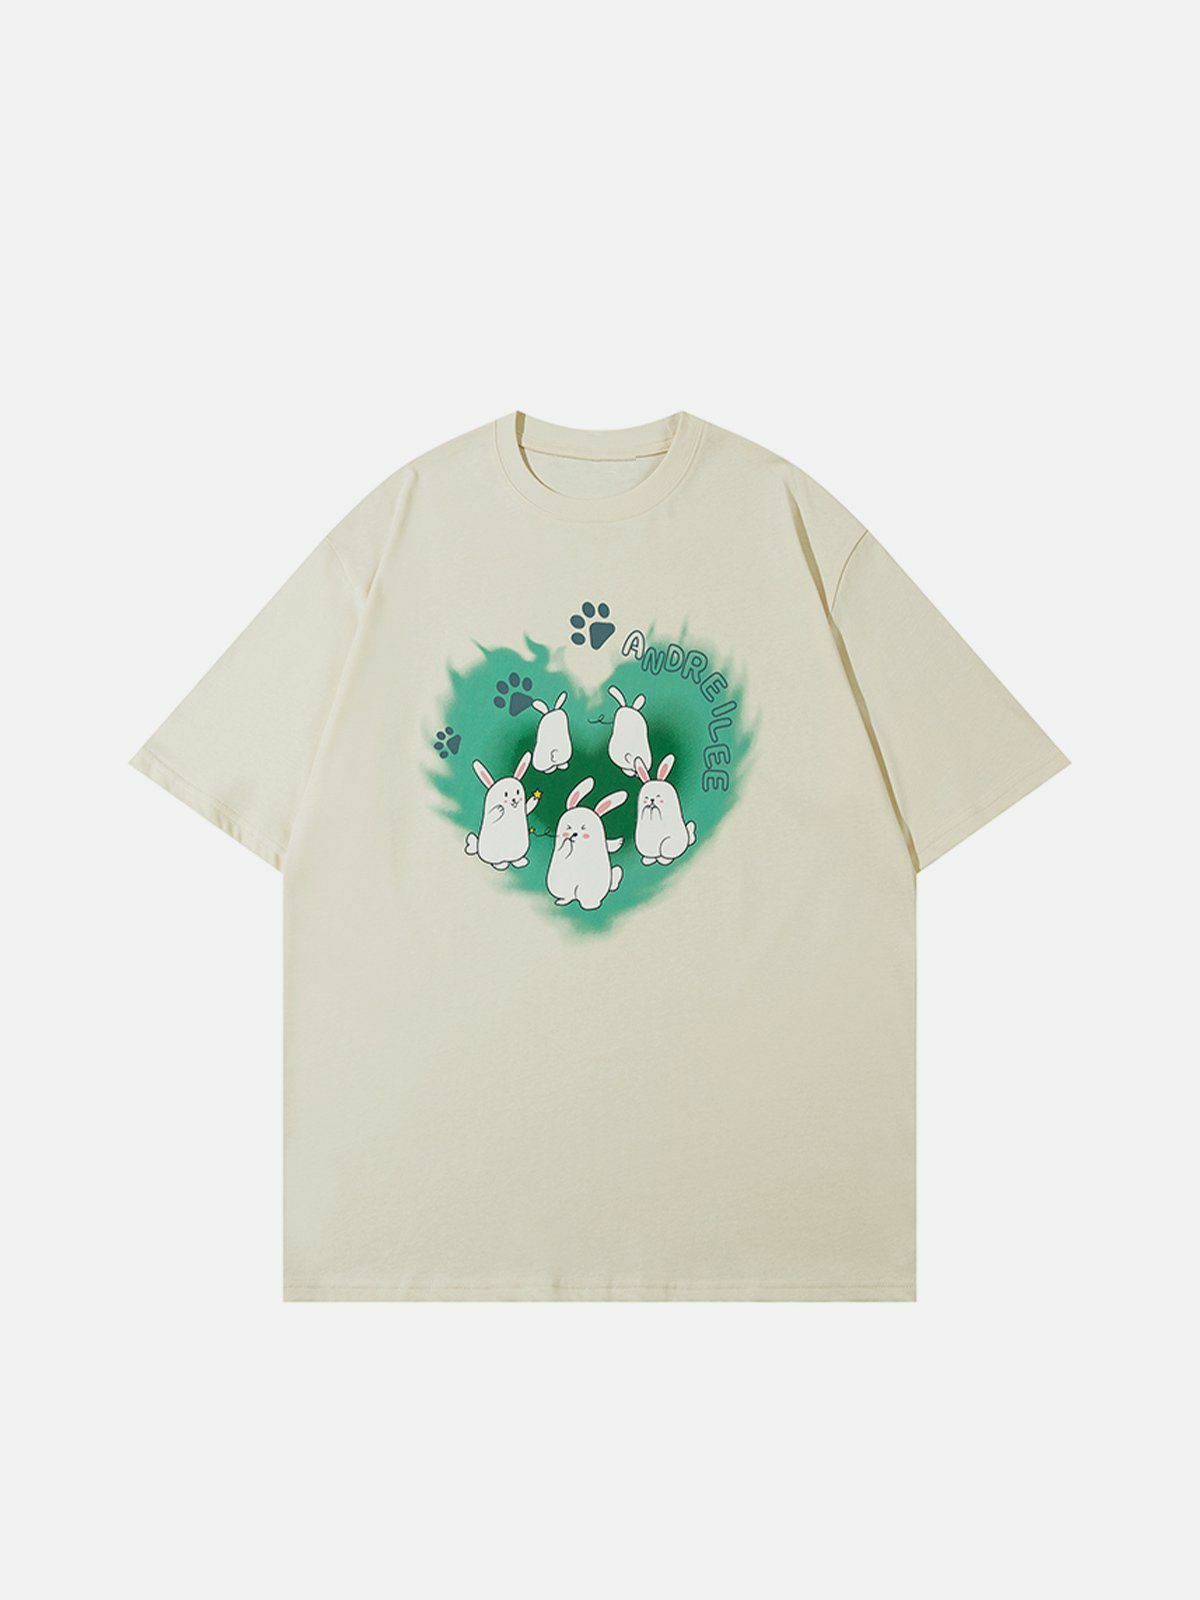 bold rabbit print tee edgy streetwear with vibrant heart elements 1406